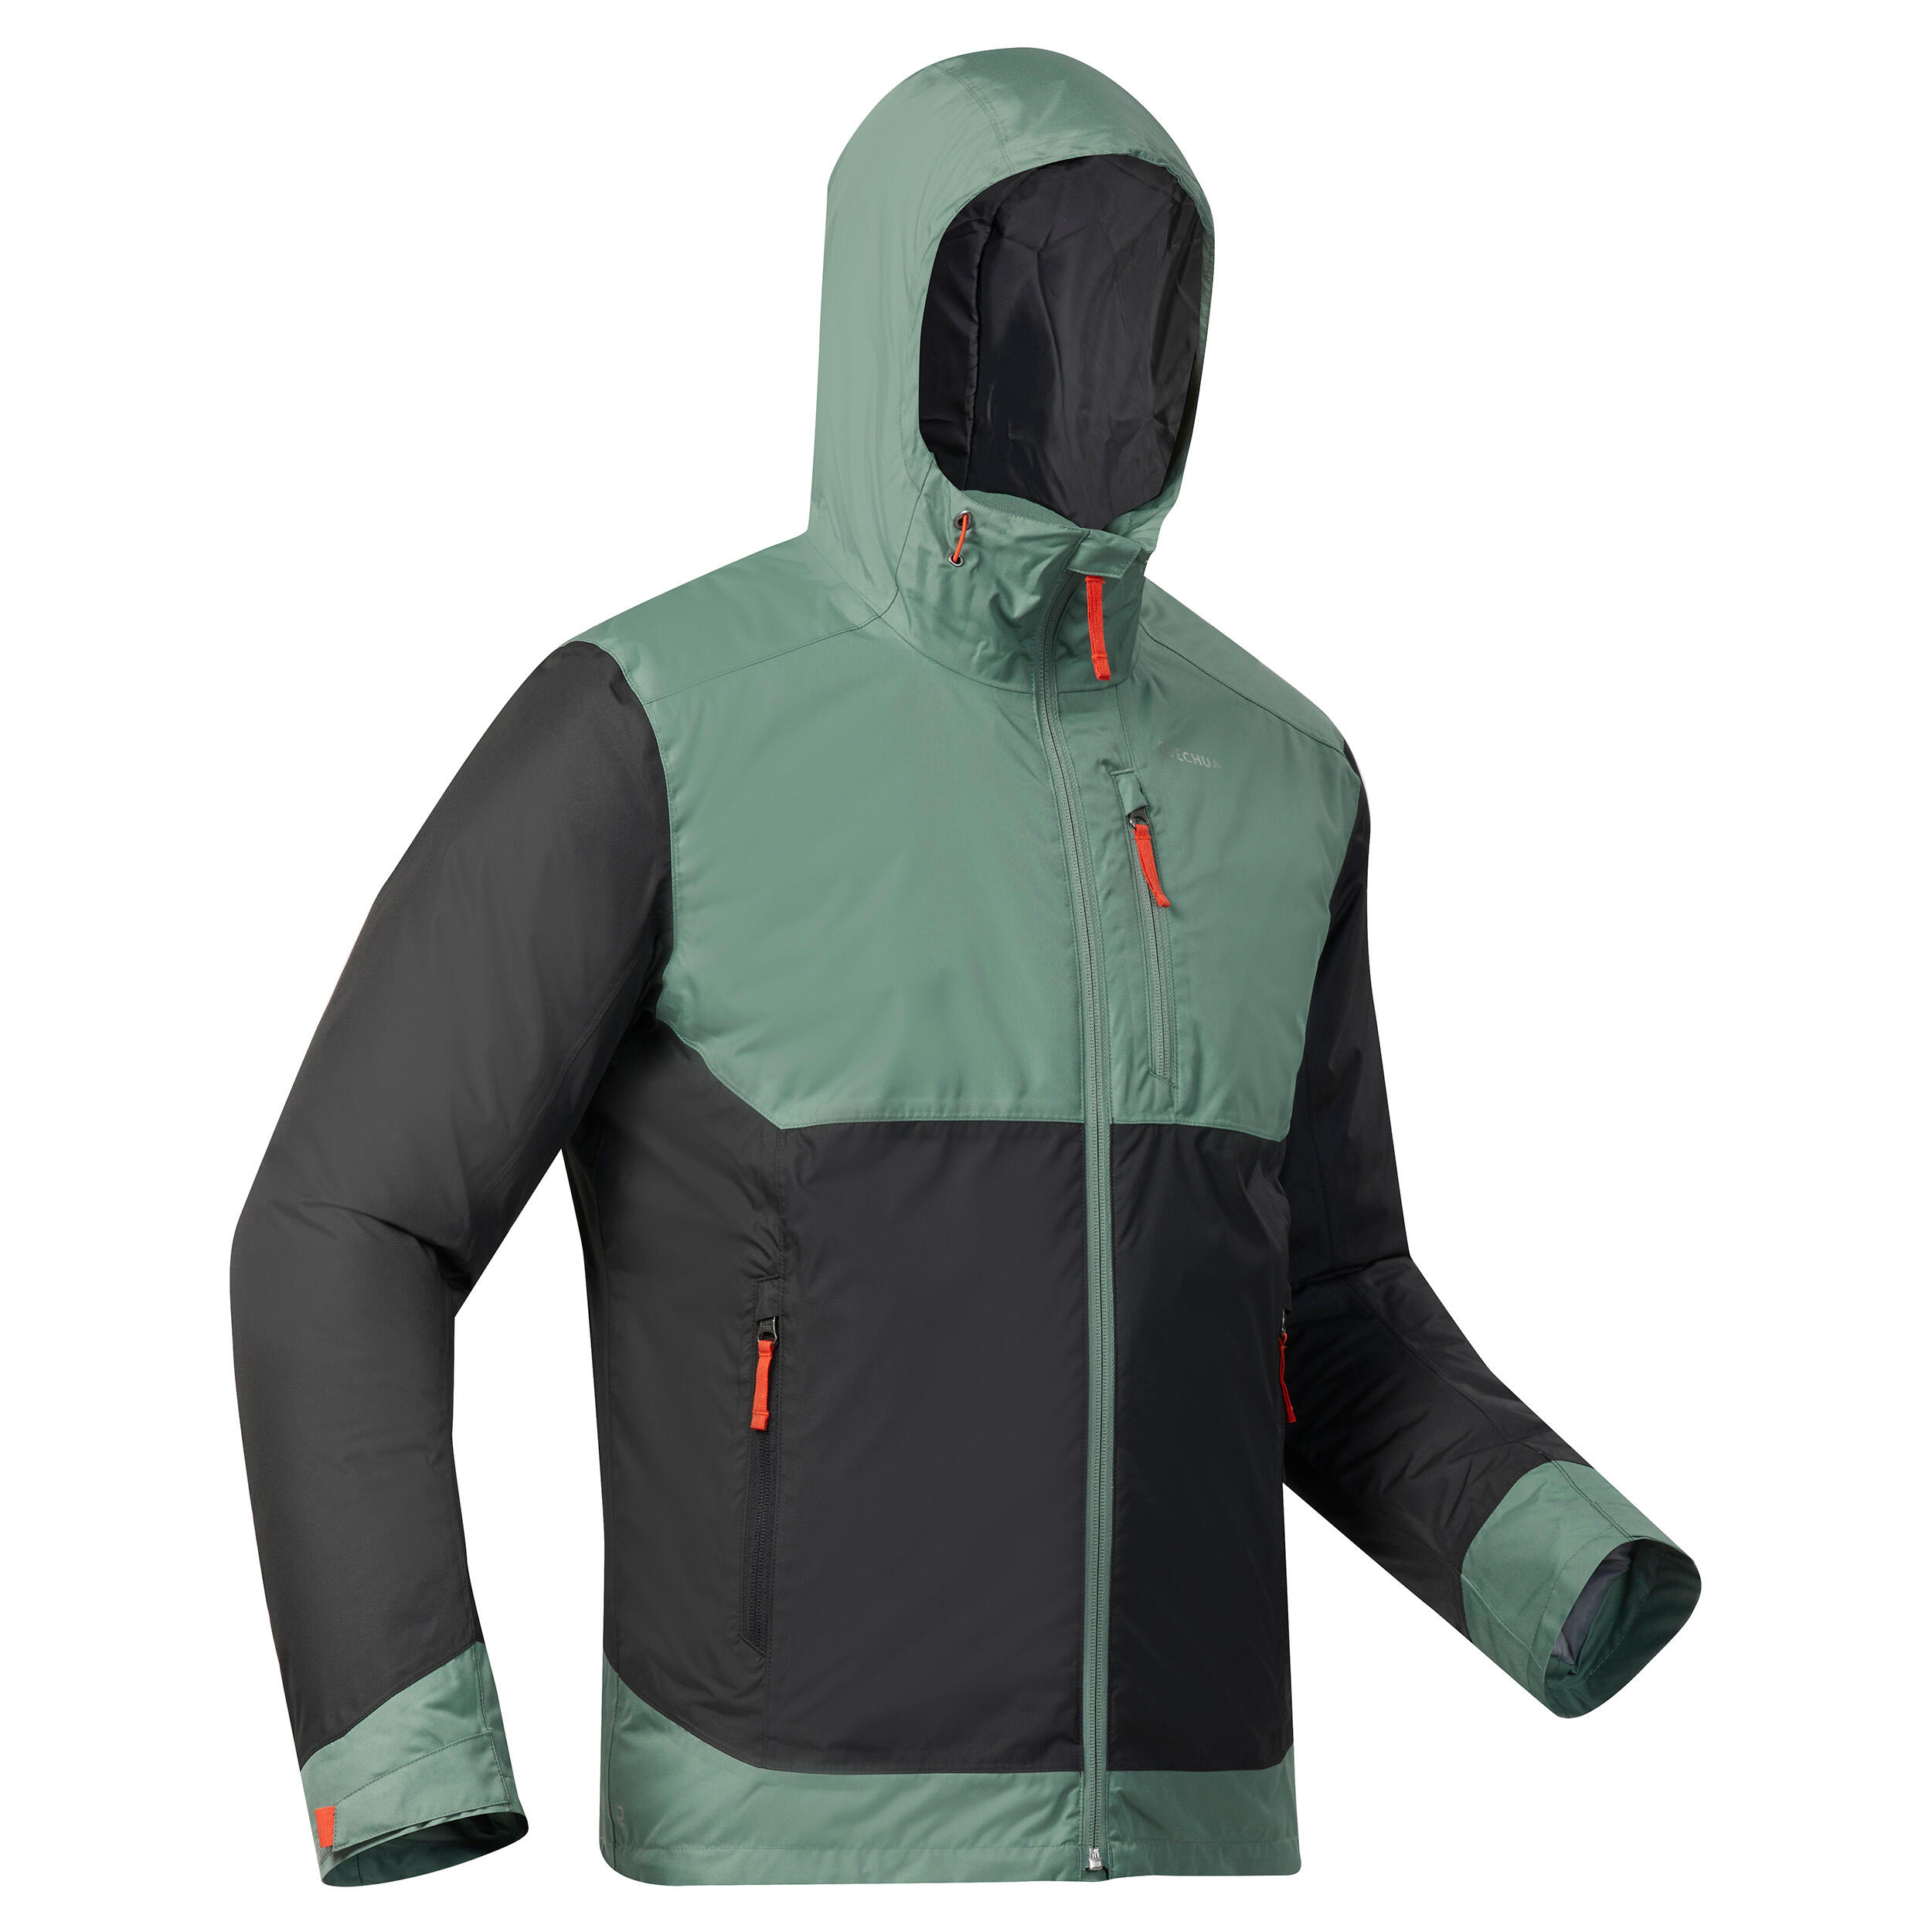 Men’s hiking waterproof winter jacket - SH500 -10°C 2/10